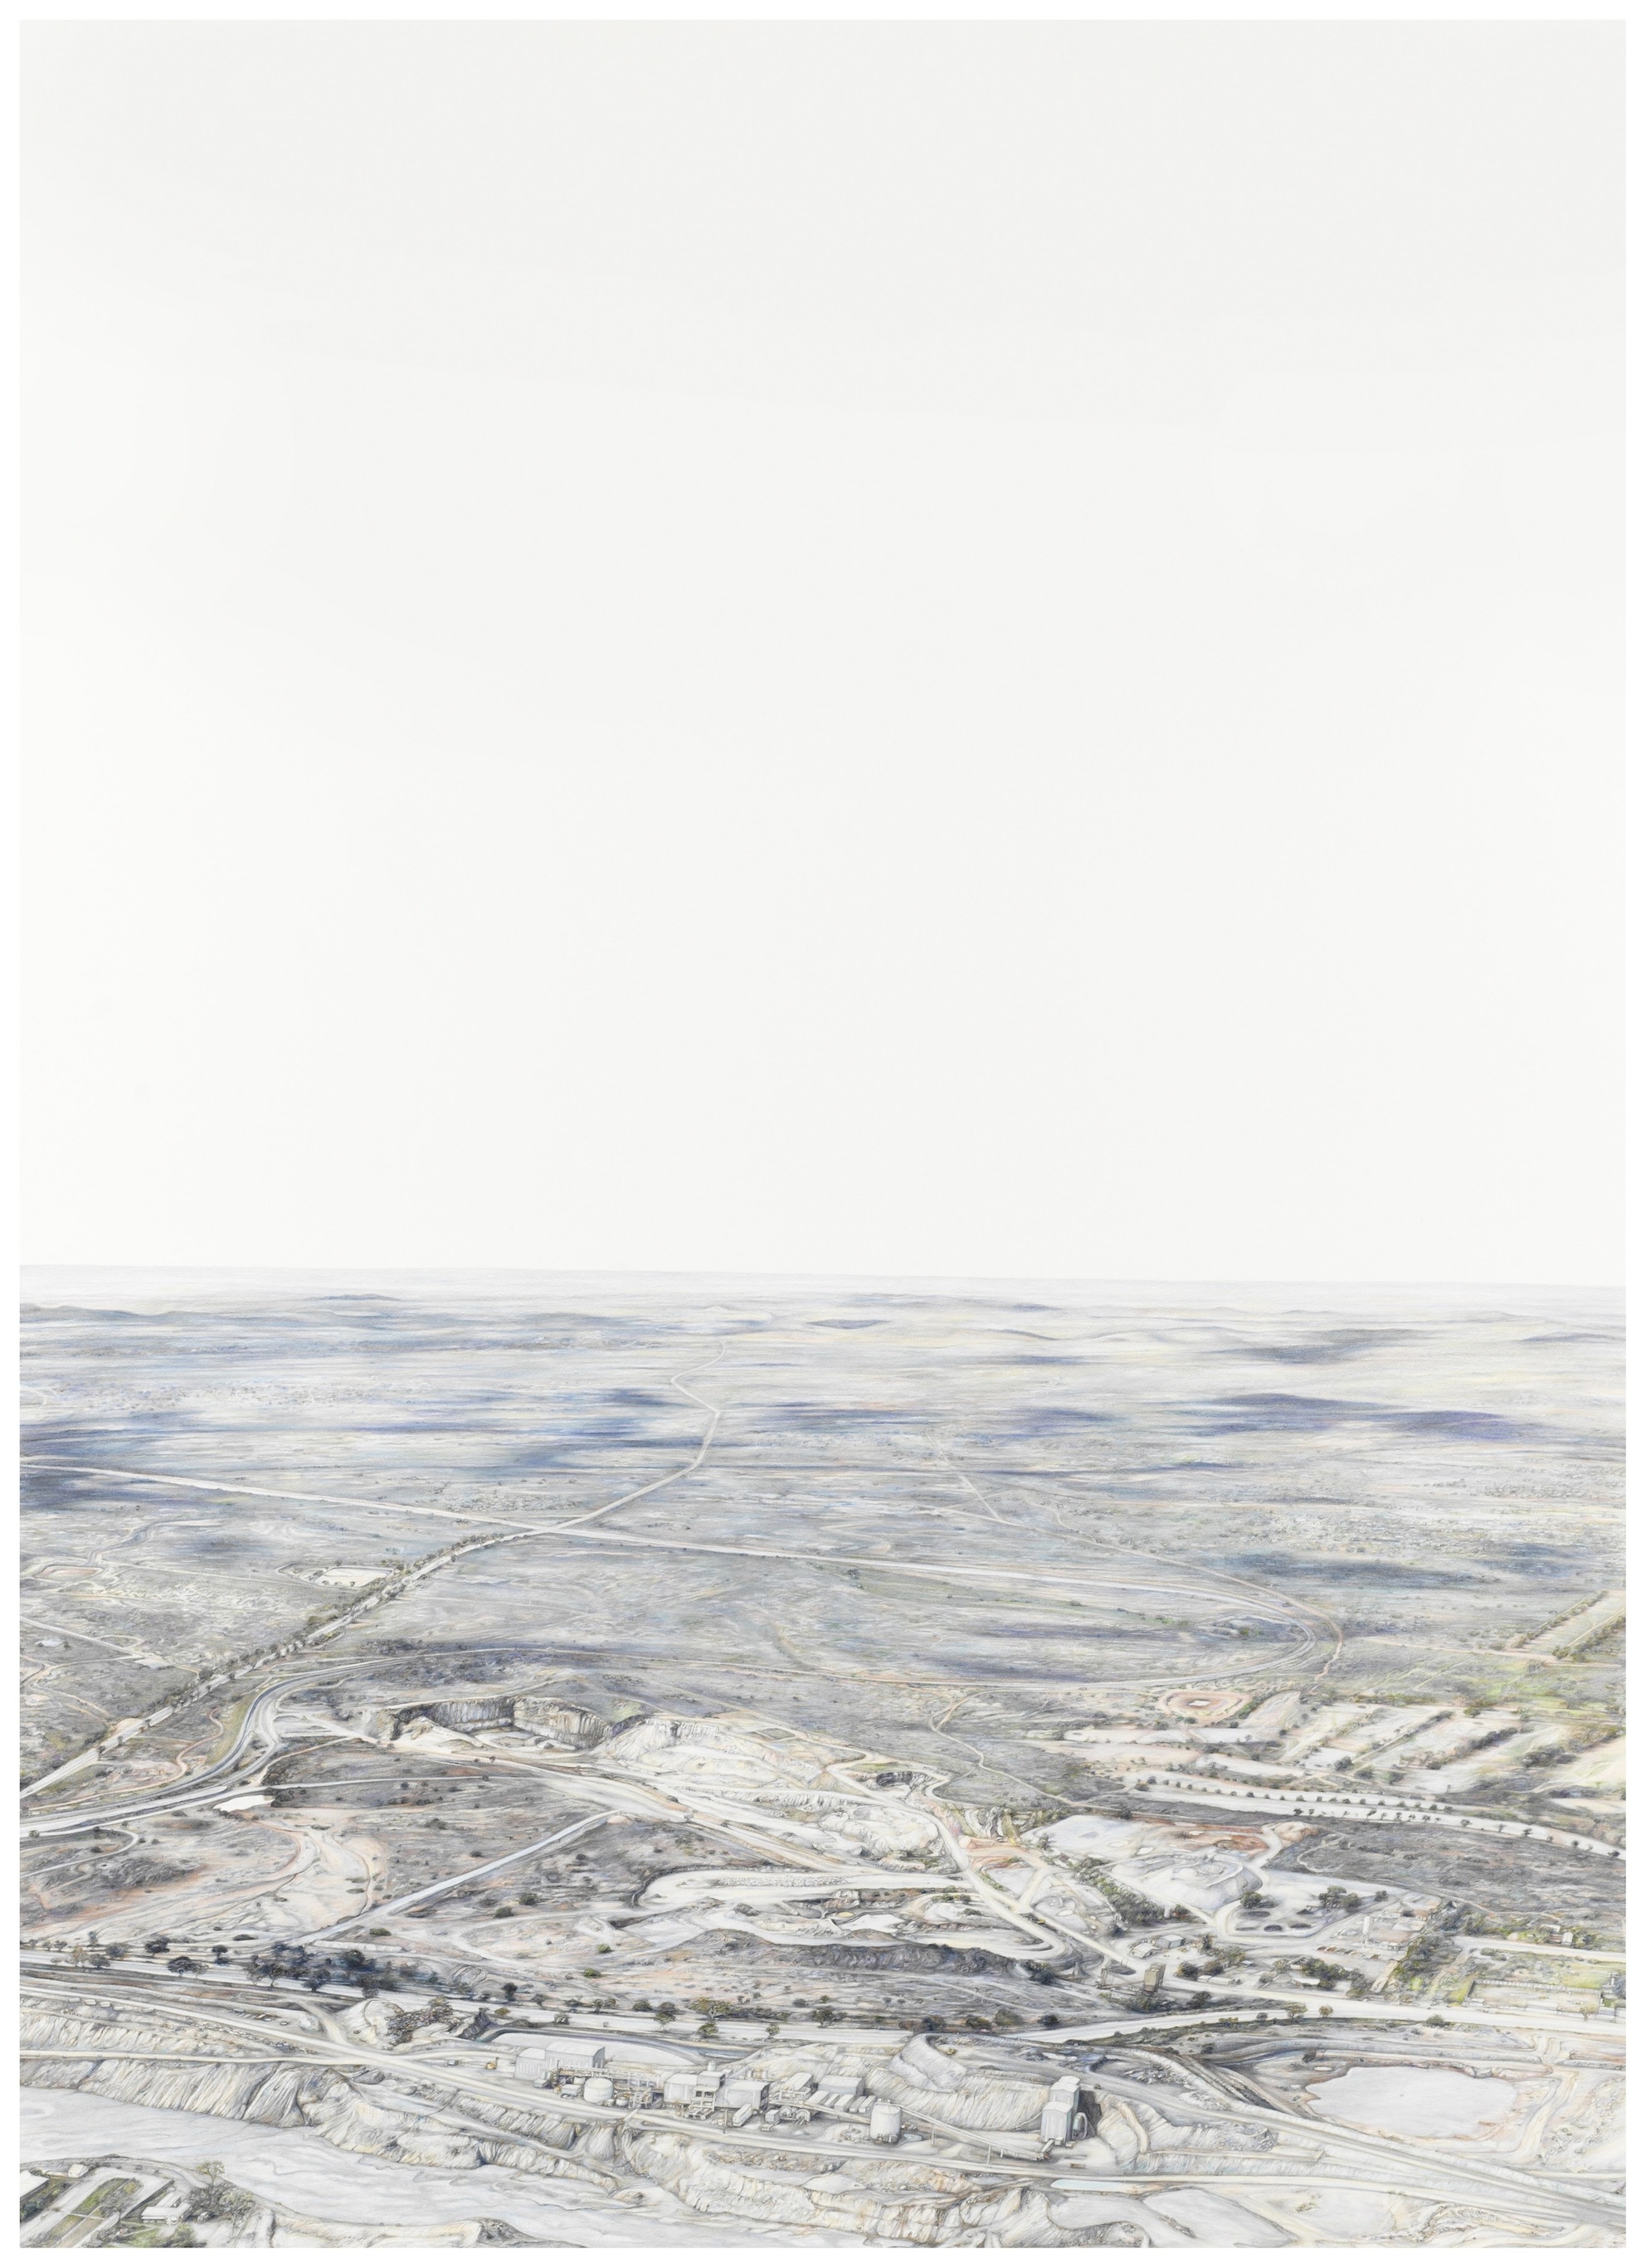 Mines Silver Lined (Broken Hill back track) by Paul White | Lethbridge Landscape Prize 2021 Finalists | Lethbridge Gallery